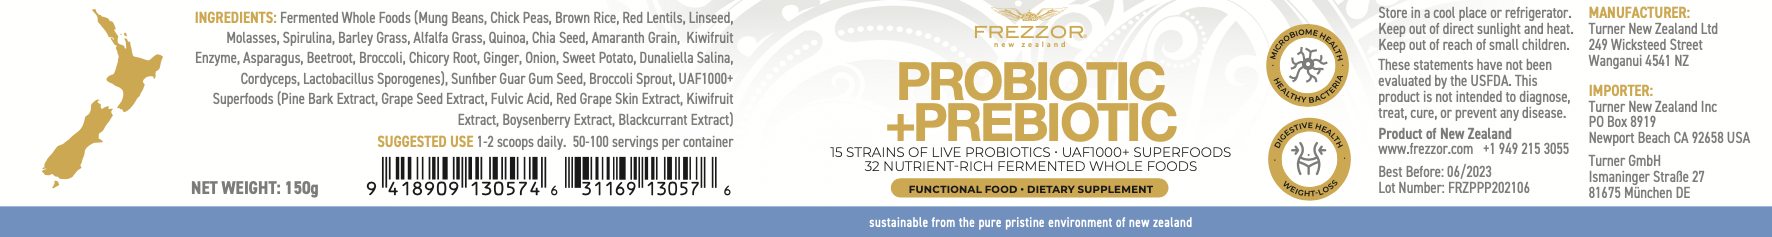 Probiotic +Prebiotic Powder  FREZZOR 